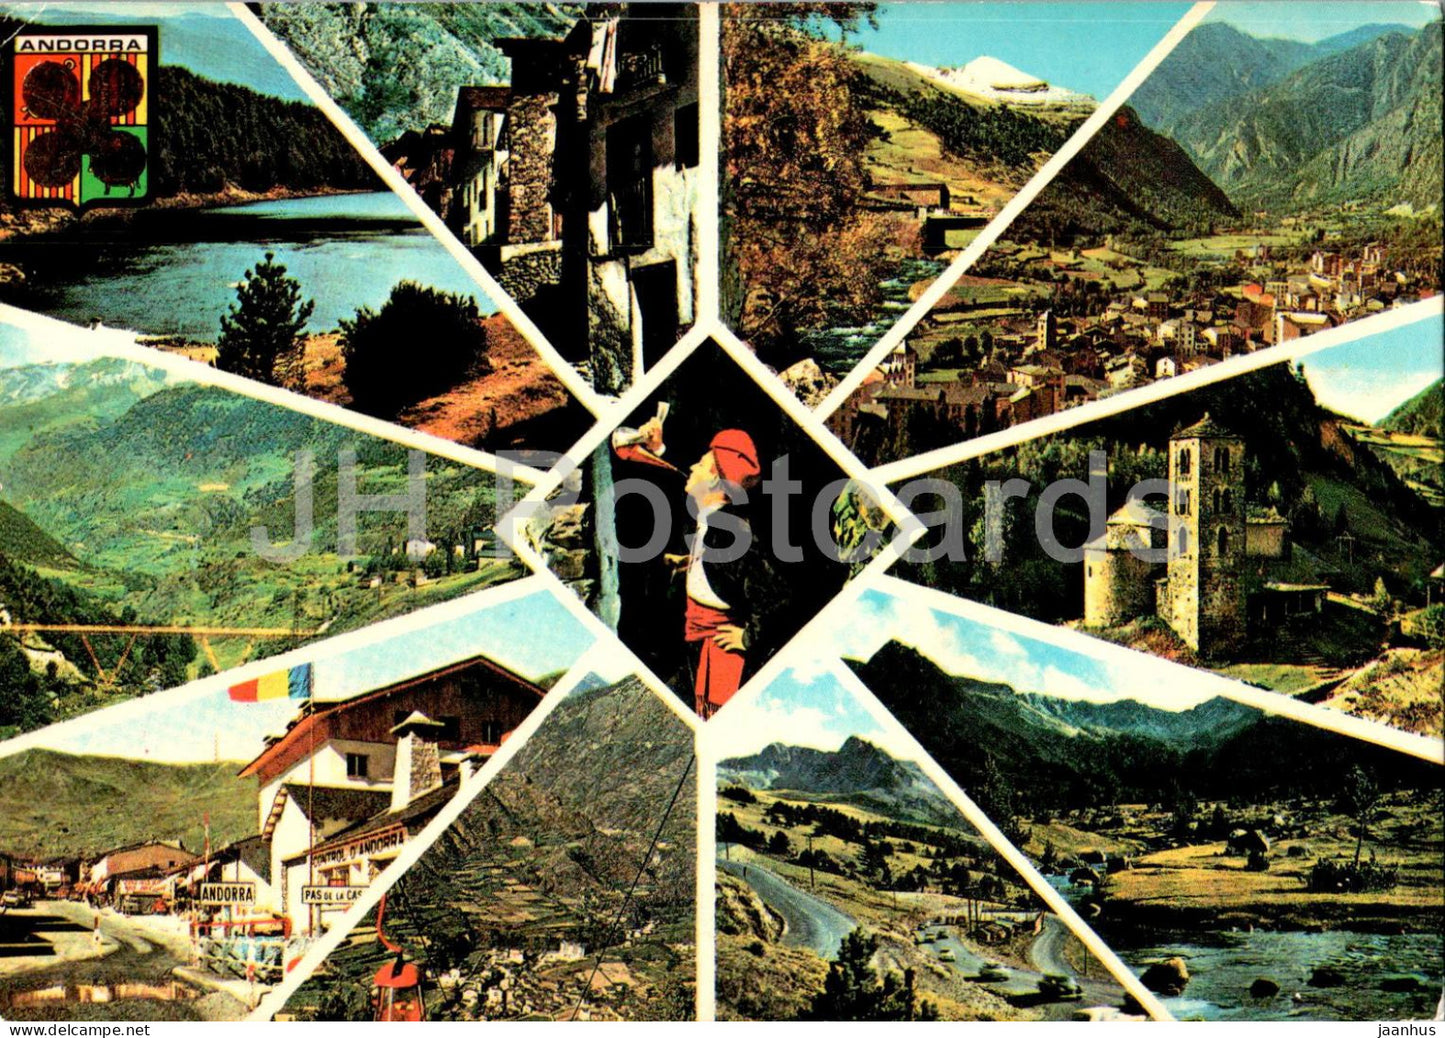 Valls D'Andorra - En parcourant les Vallees d'Andorre - multiview - 15 - 1982 - Andorra - used - JH Postcards